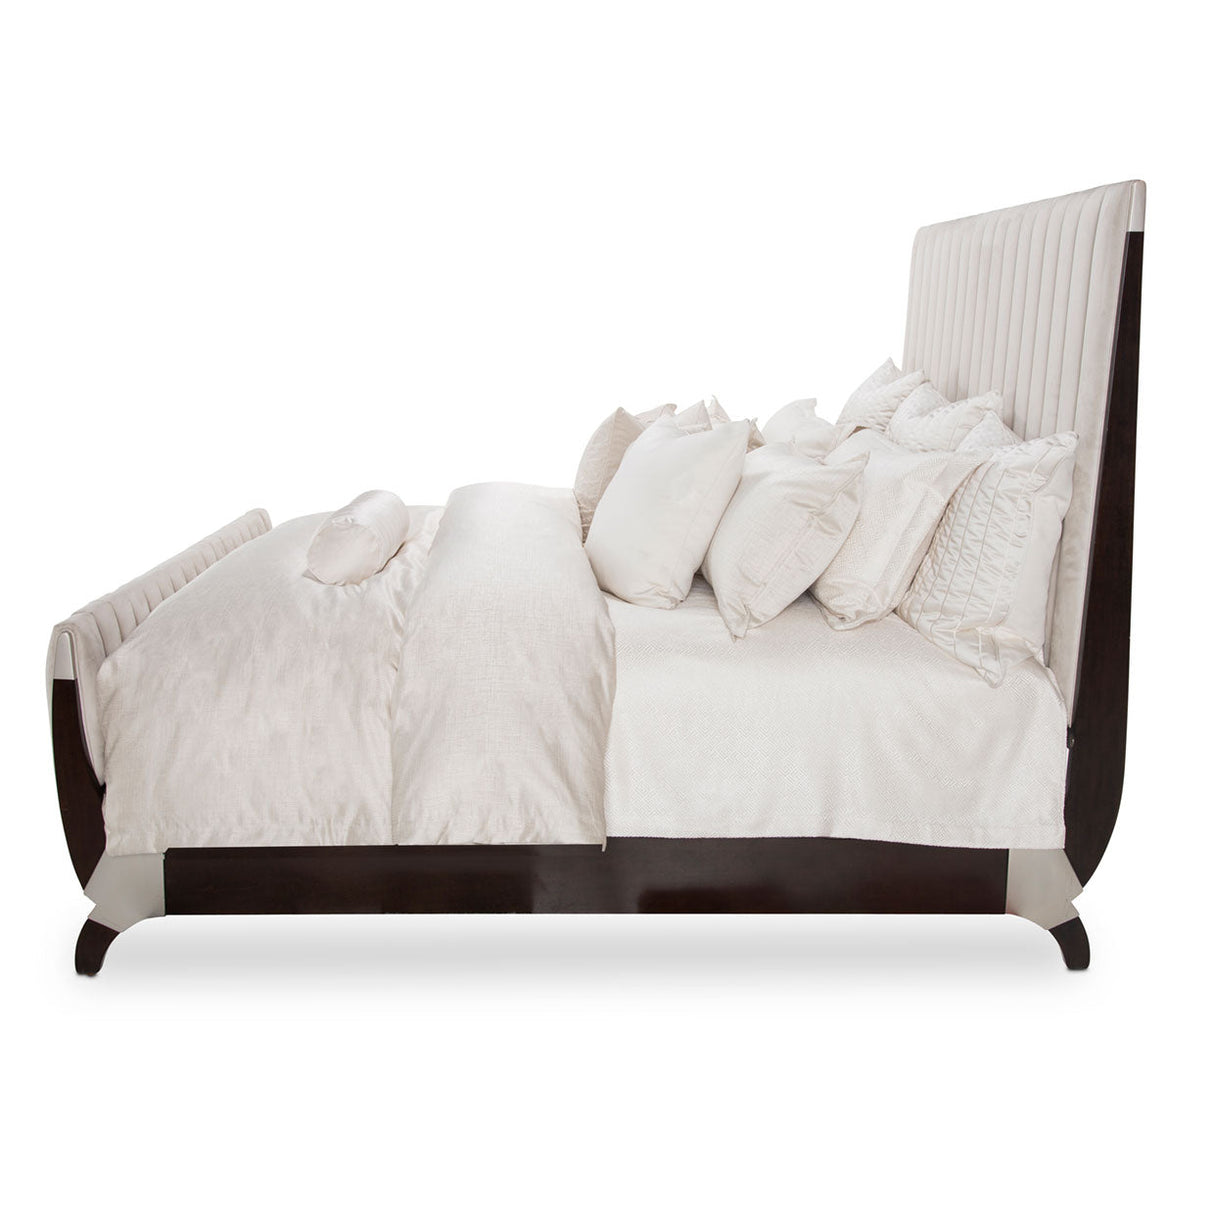 Aico Furniture - Paris Chic 5 Piece Queen Tufted Sleigh Bedroom Set In Espresso - N9003000Qns4-409-5Set